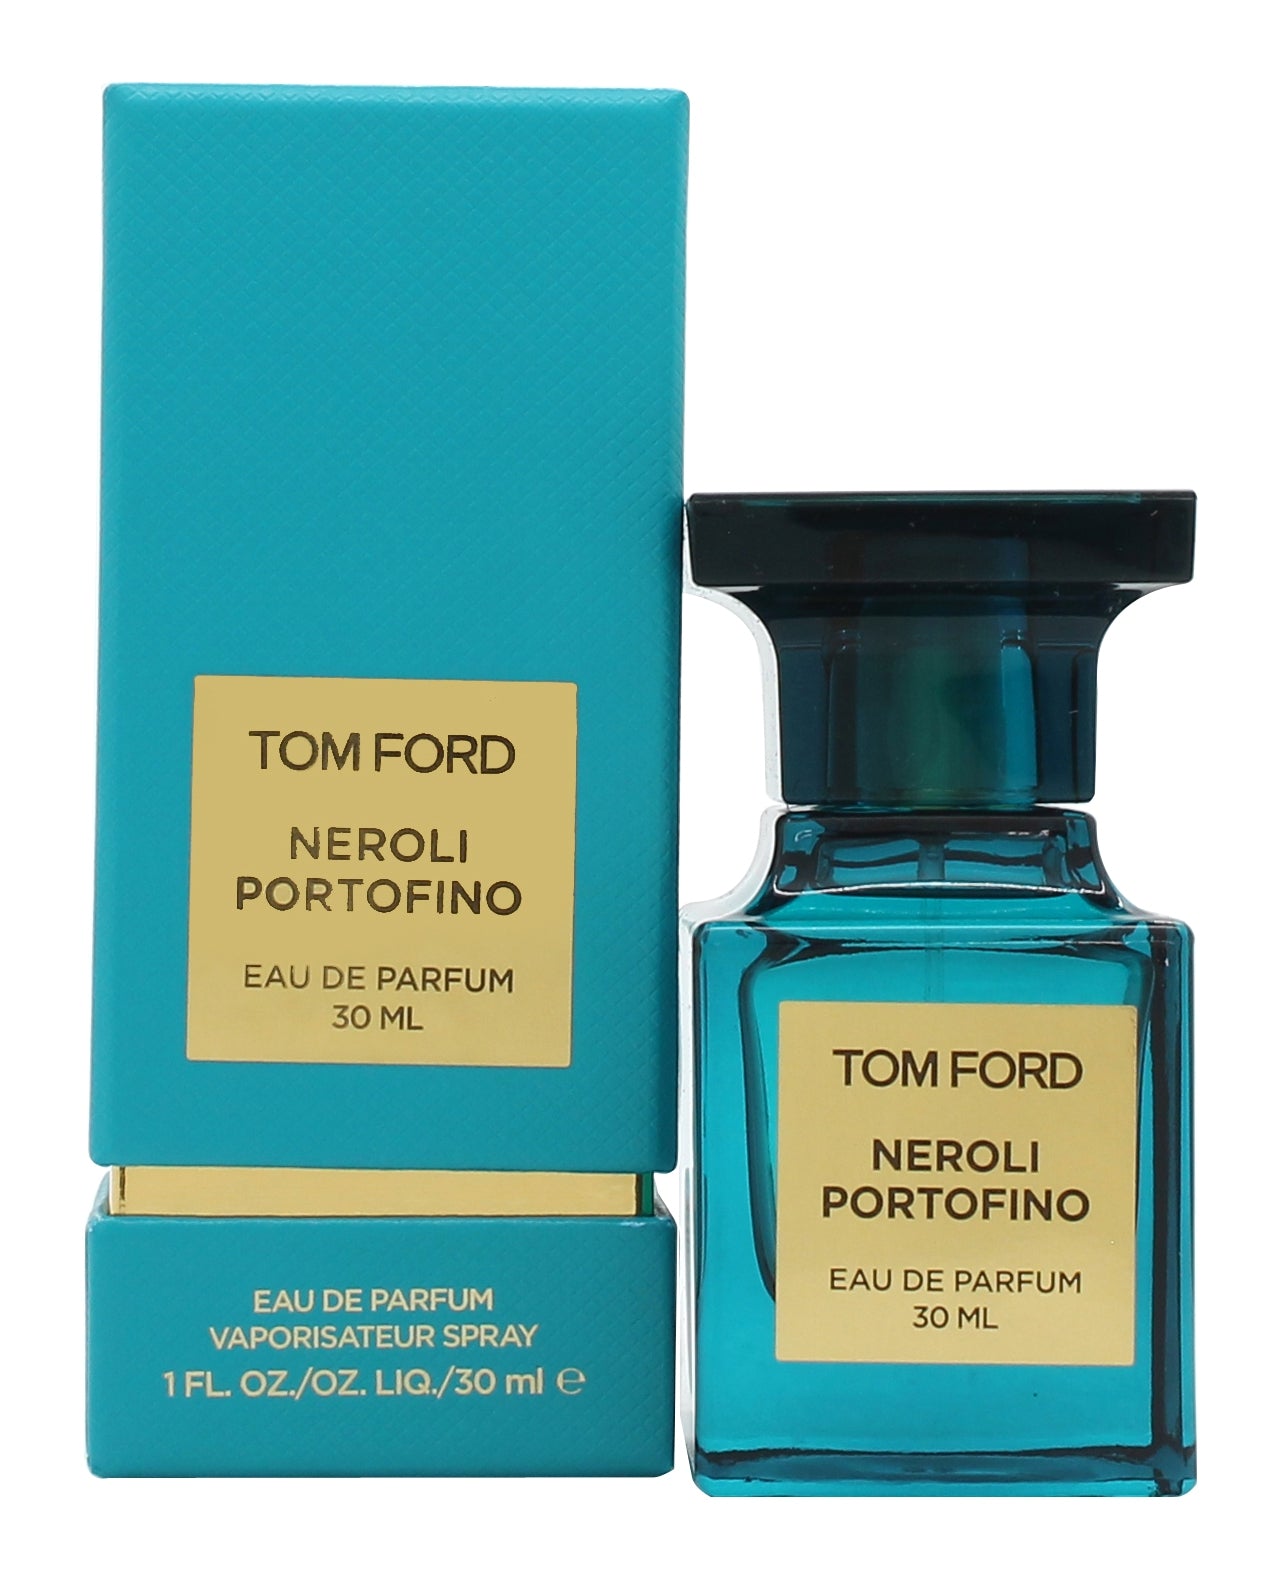 View Tom Ford Private Blend Neroli Portofino Eau de Parfum 30ml Spray information